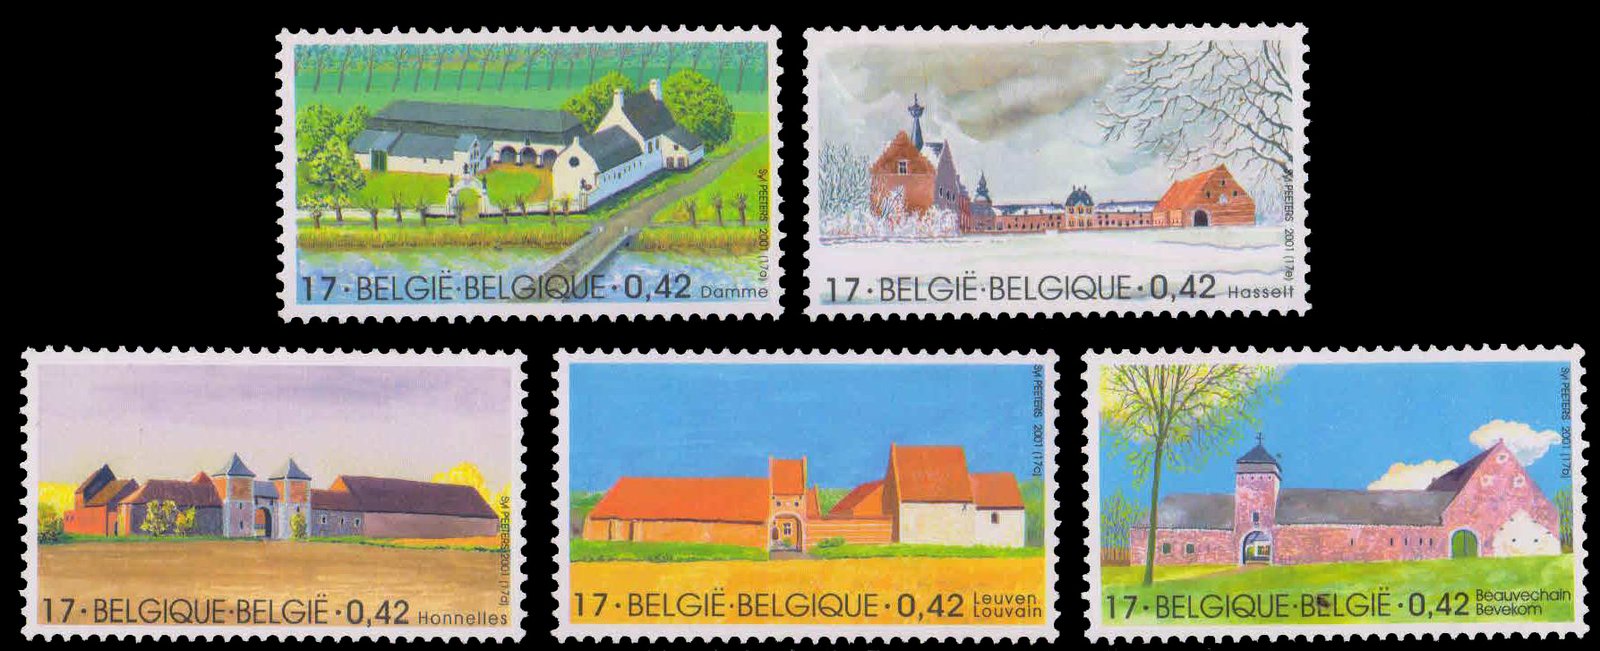 BELGIUM 2001-Large Farm Houses, Set of 5, MNH, S.G. 3649-3653, Cat � 8-